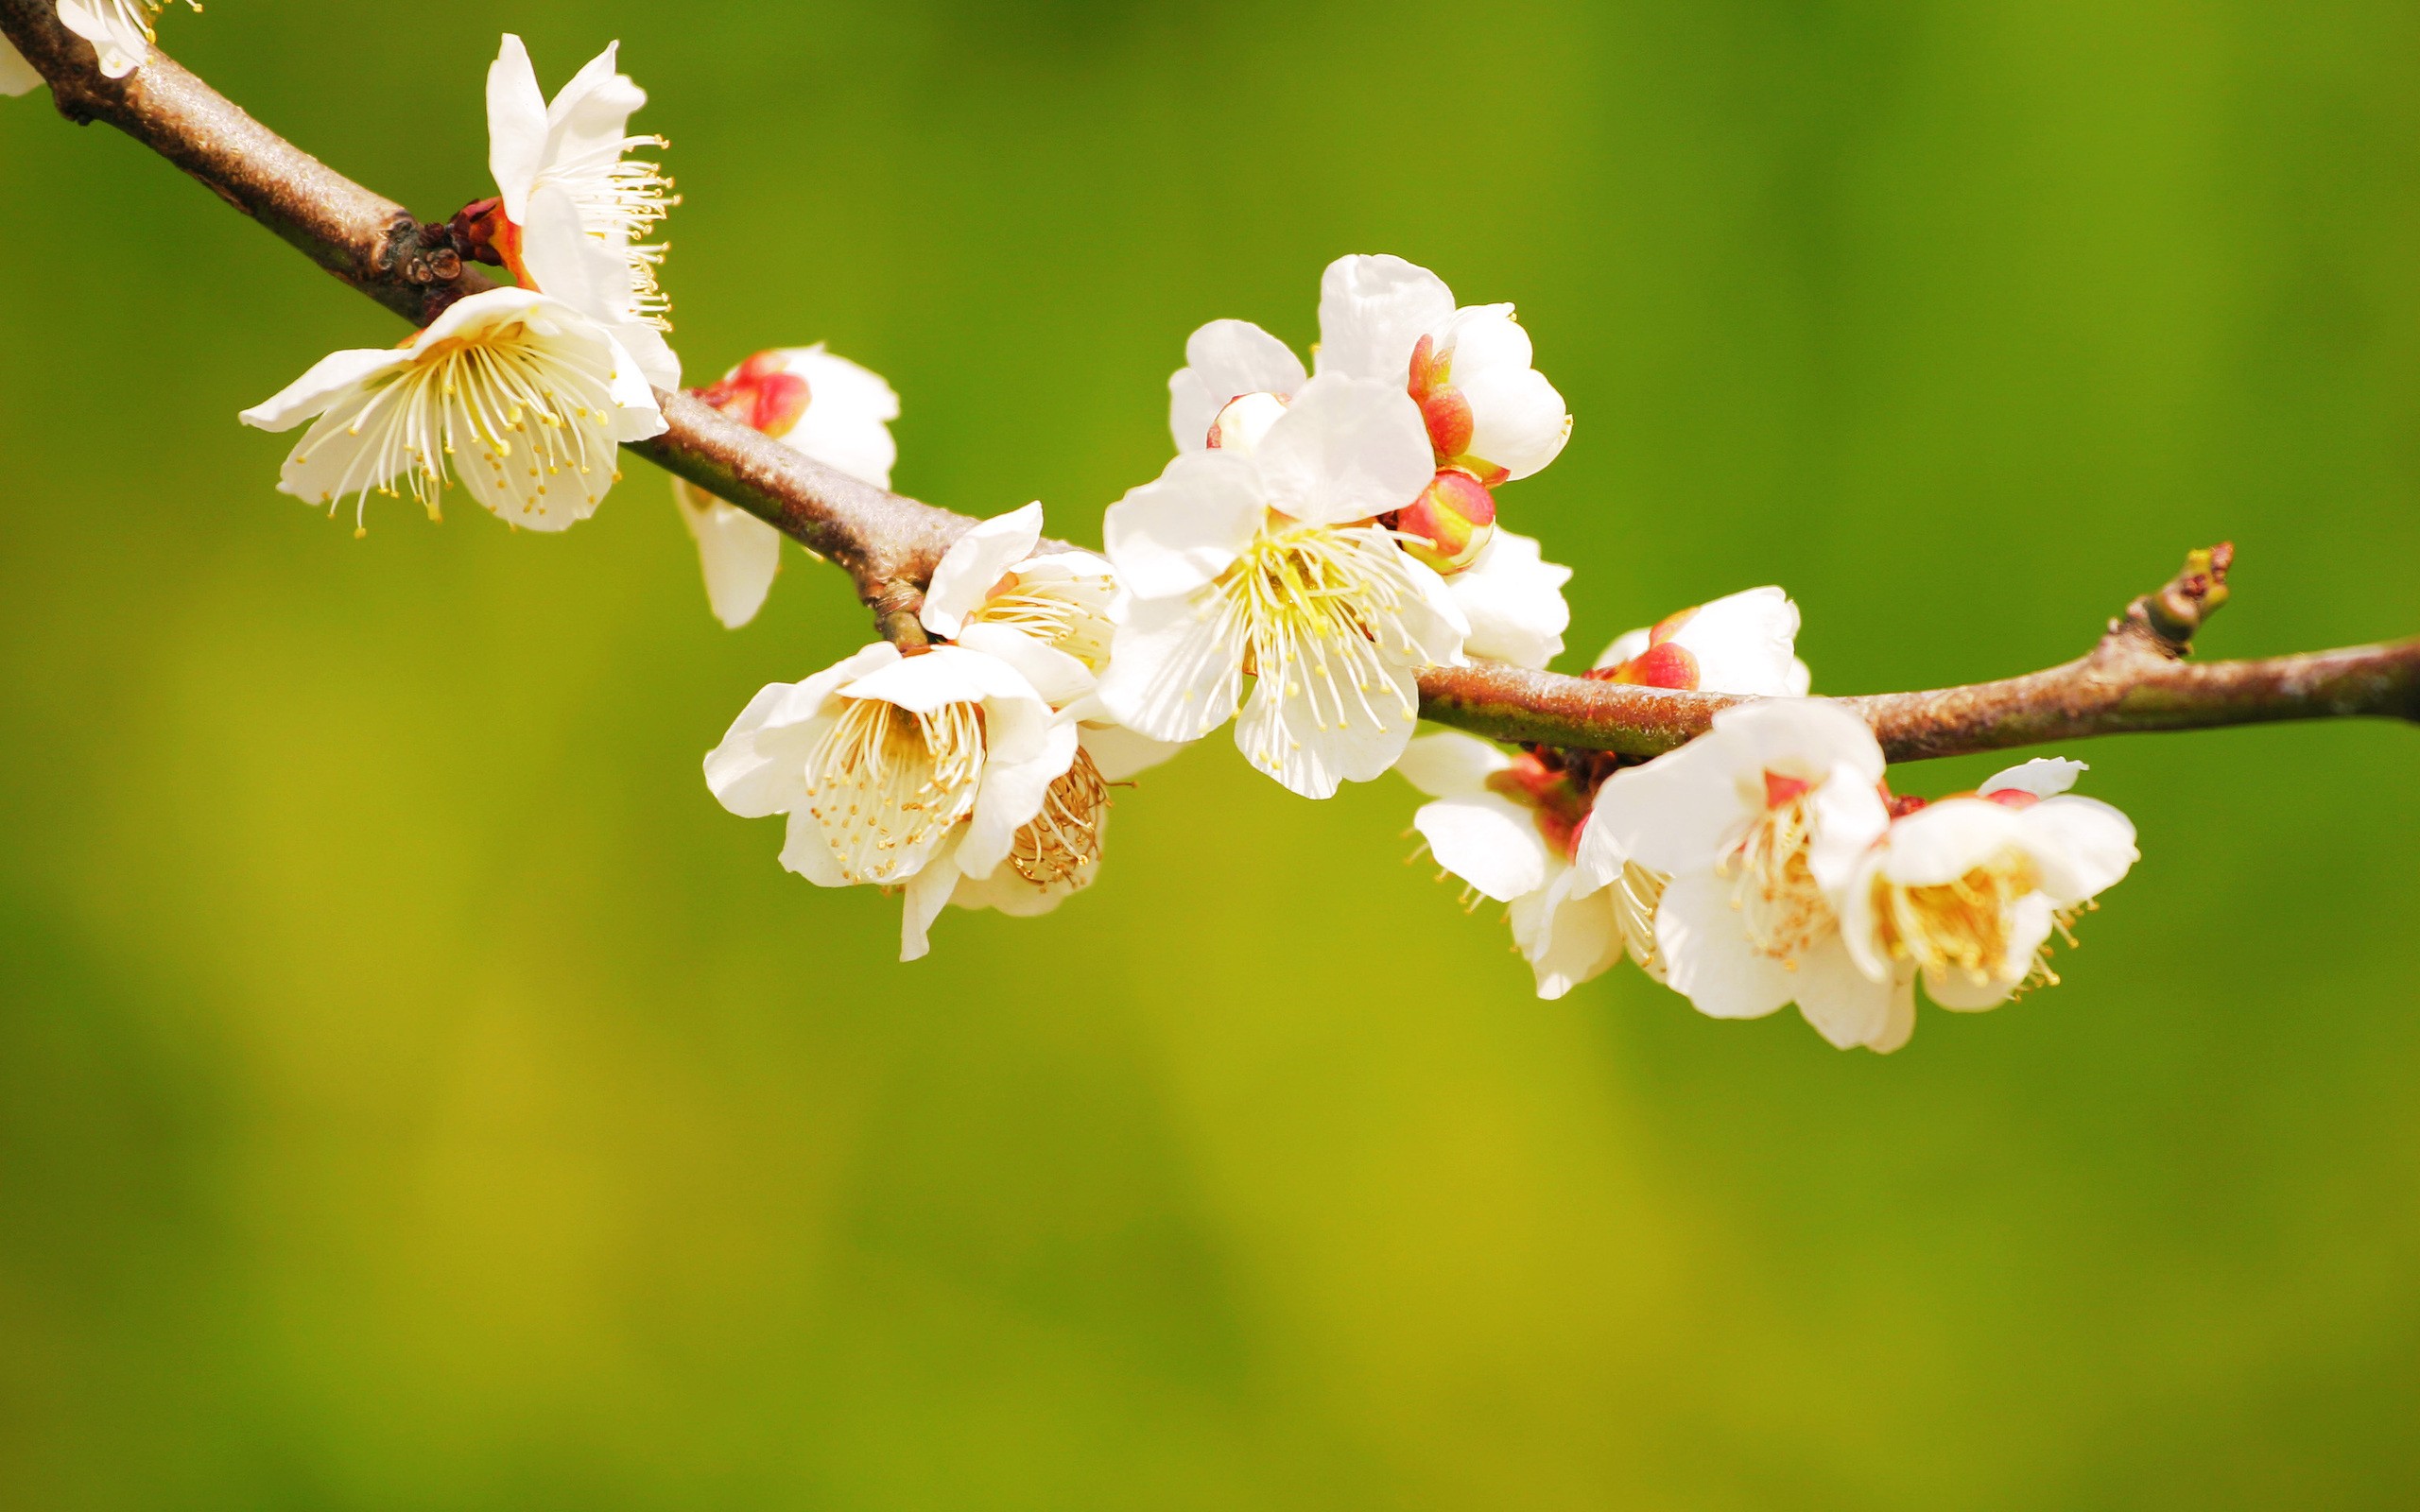 nature, blossoms - desktop wallpaper